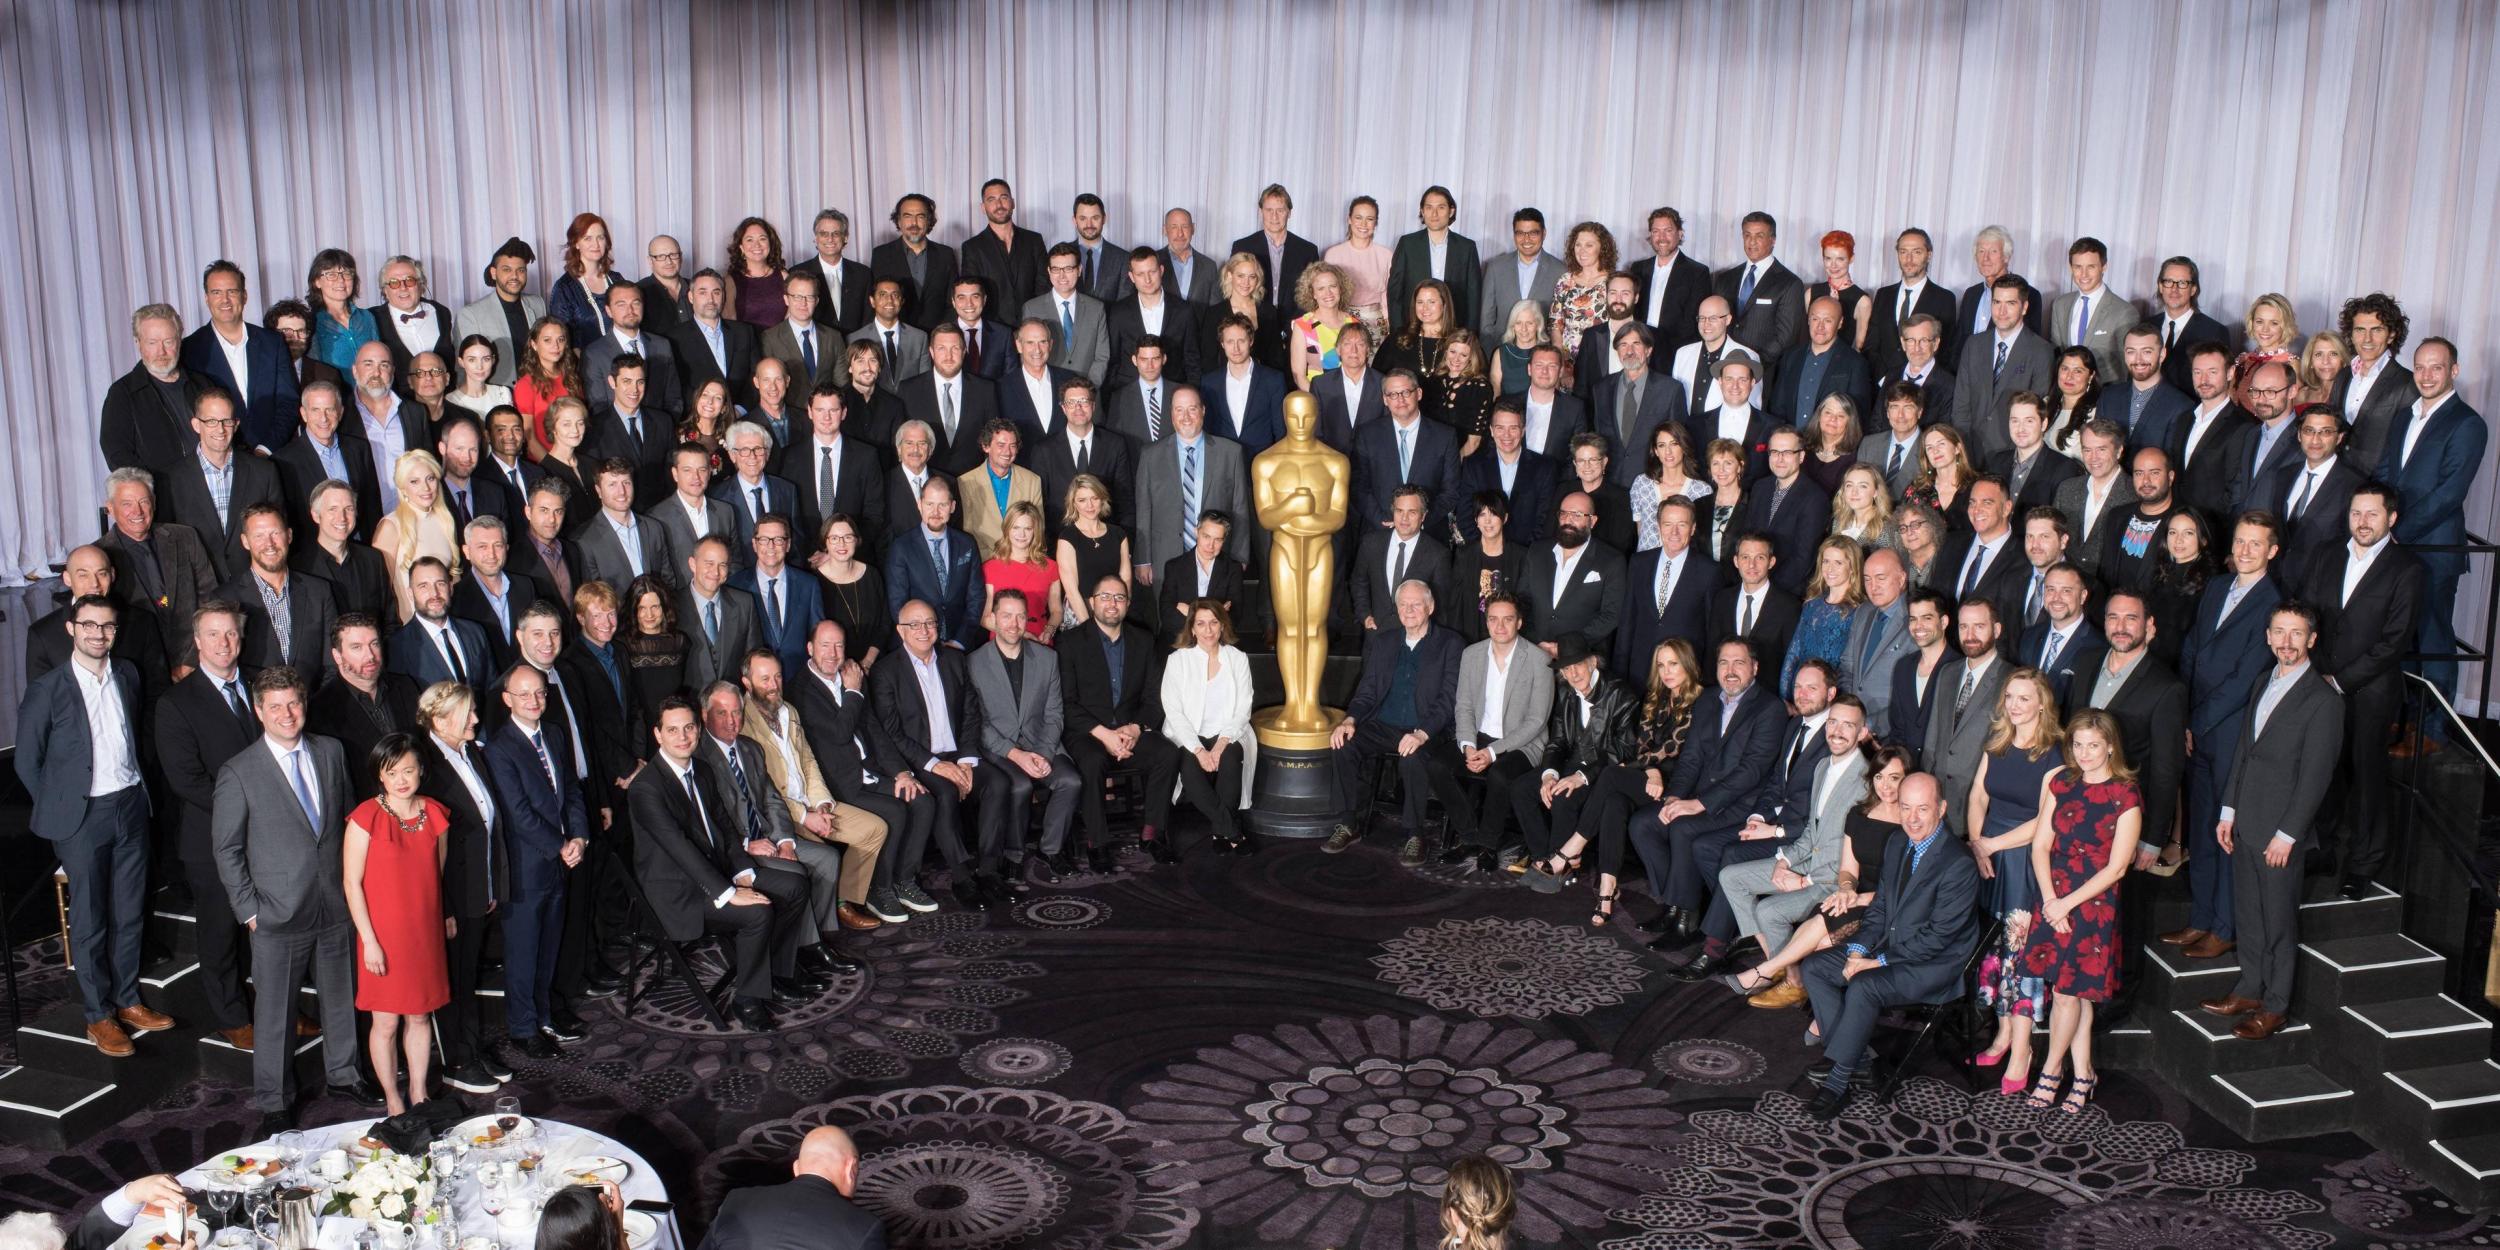 Oscars 2016 ‘class photo’ featuring Matt Damon, Leonardo DiCaprio, Jennifer Lawrence, released amidst the #OscarsSoWhite controversy